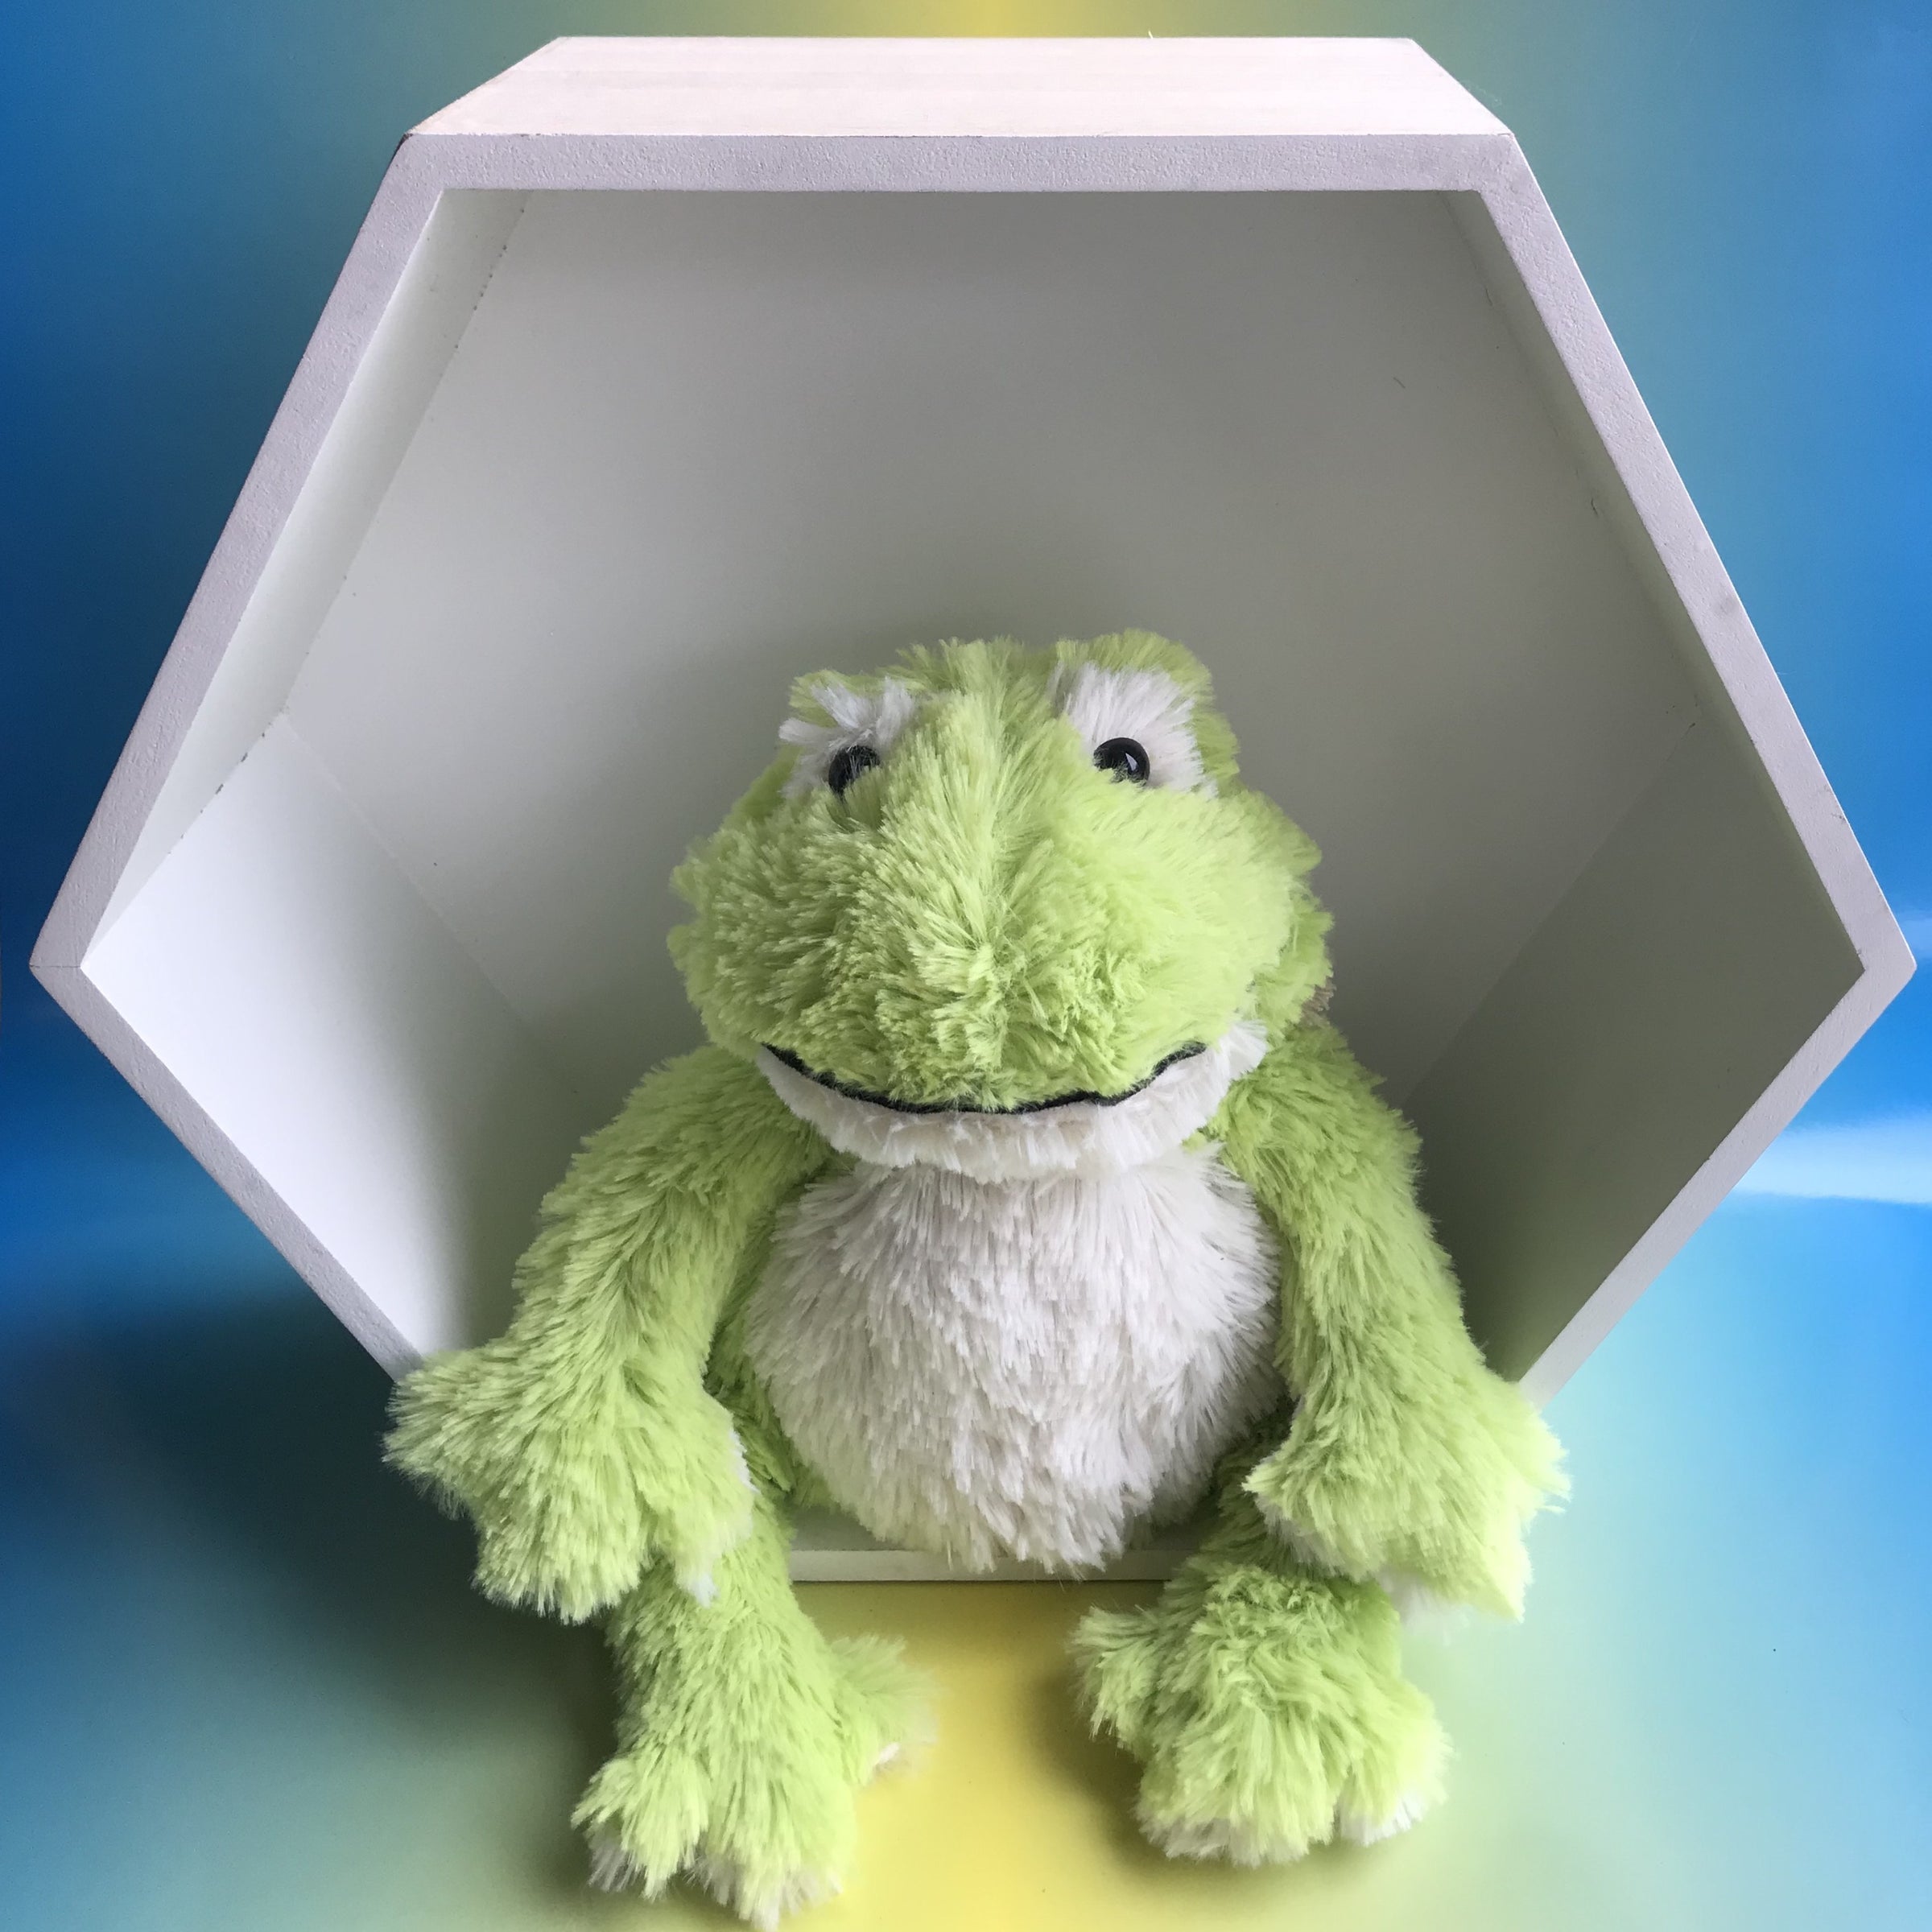 Warmies Frog Plush